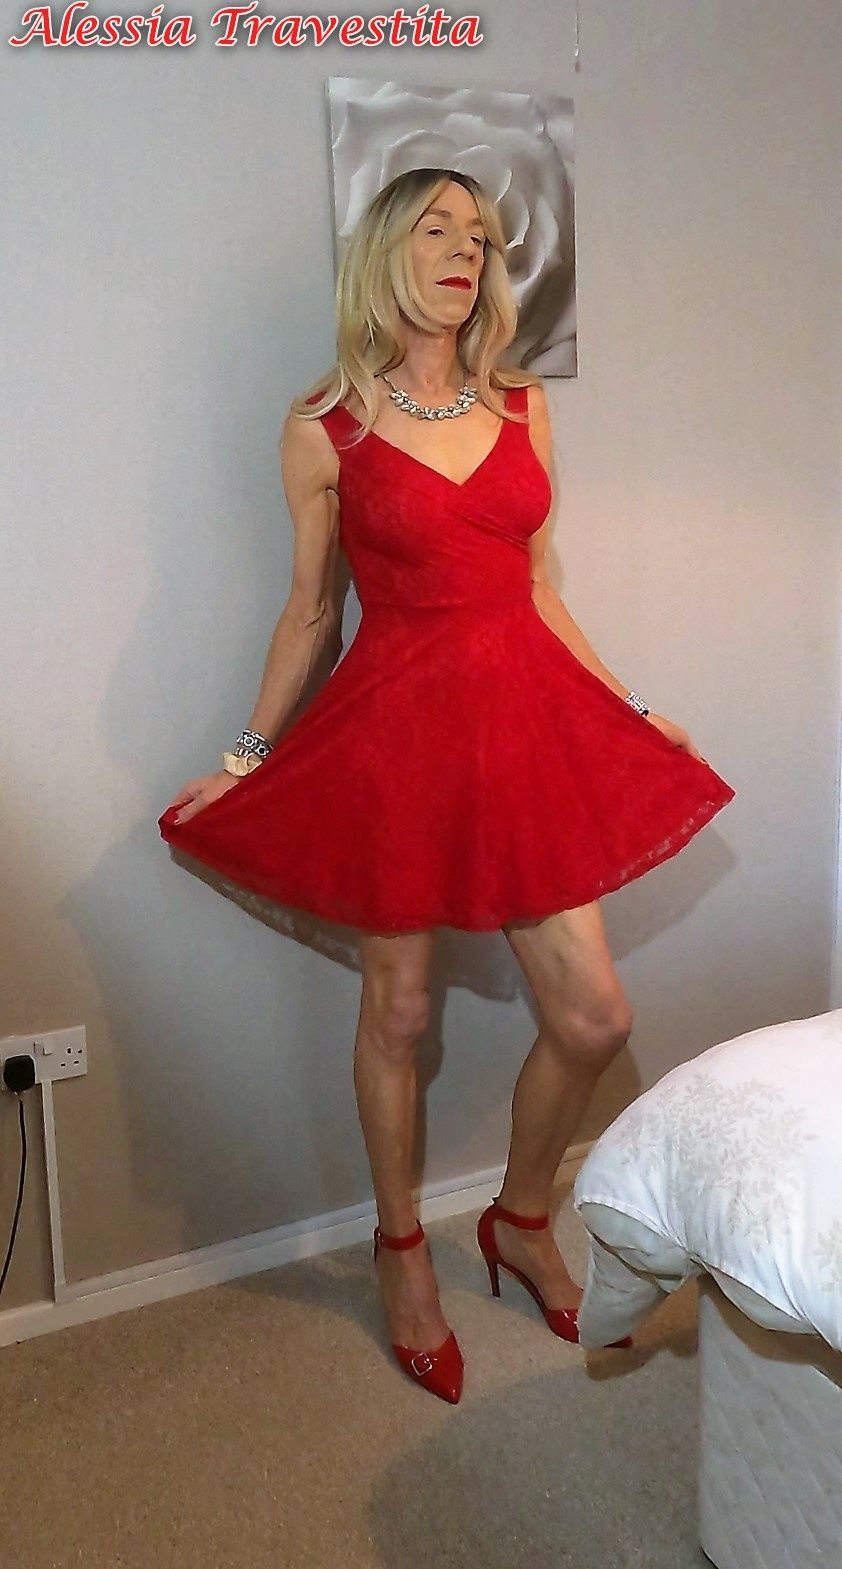 65 Alessia Travestita in Flirty Red Dress #23